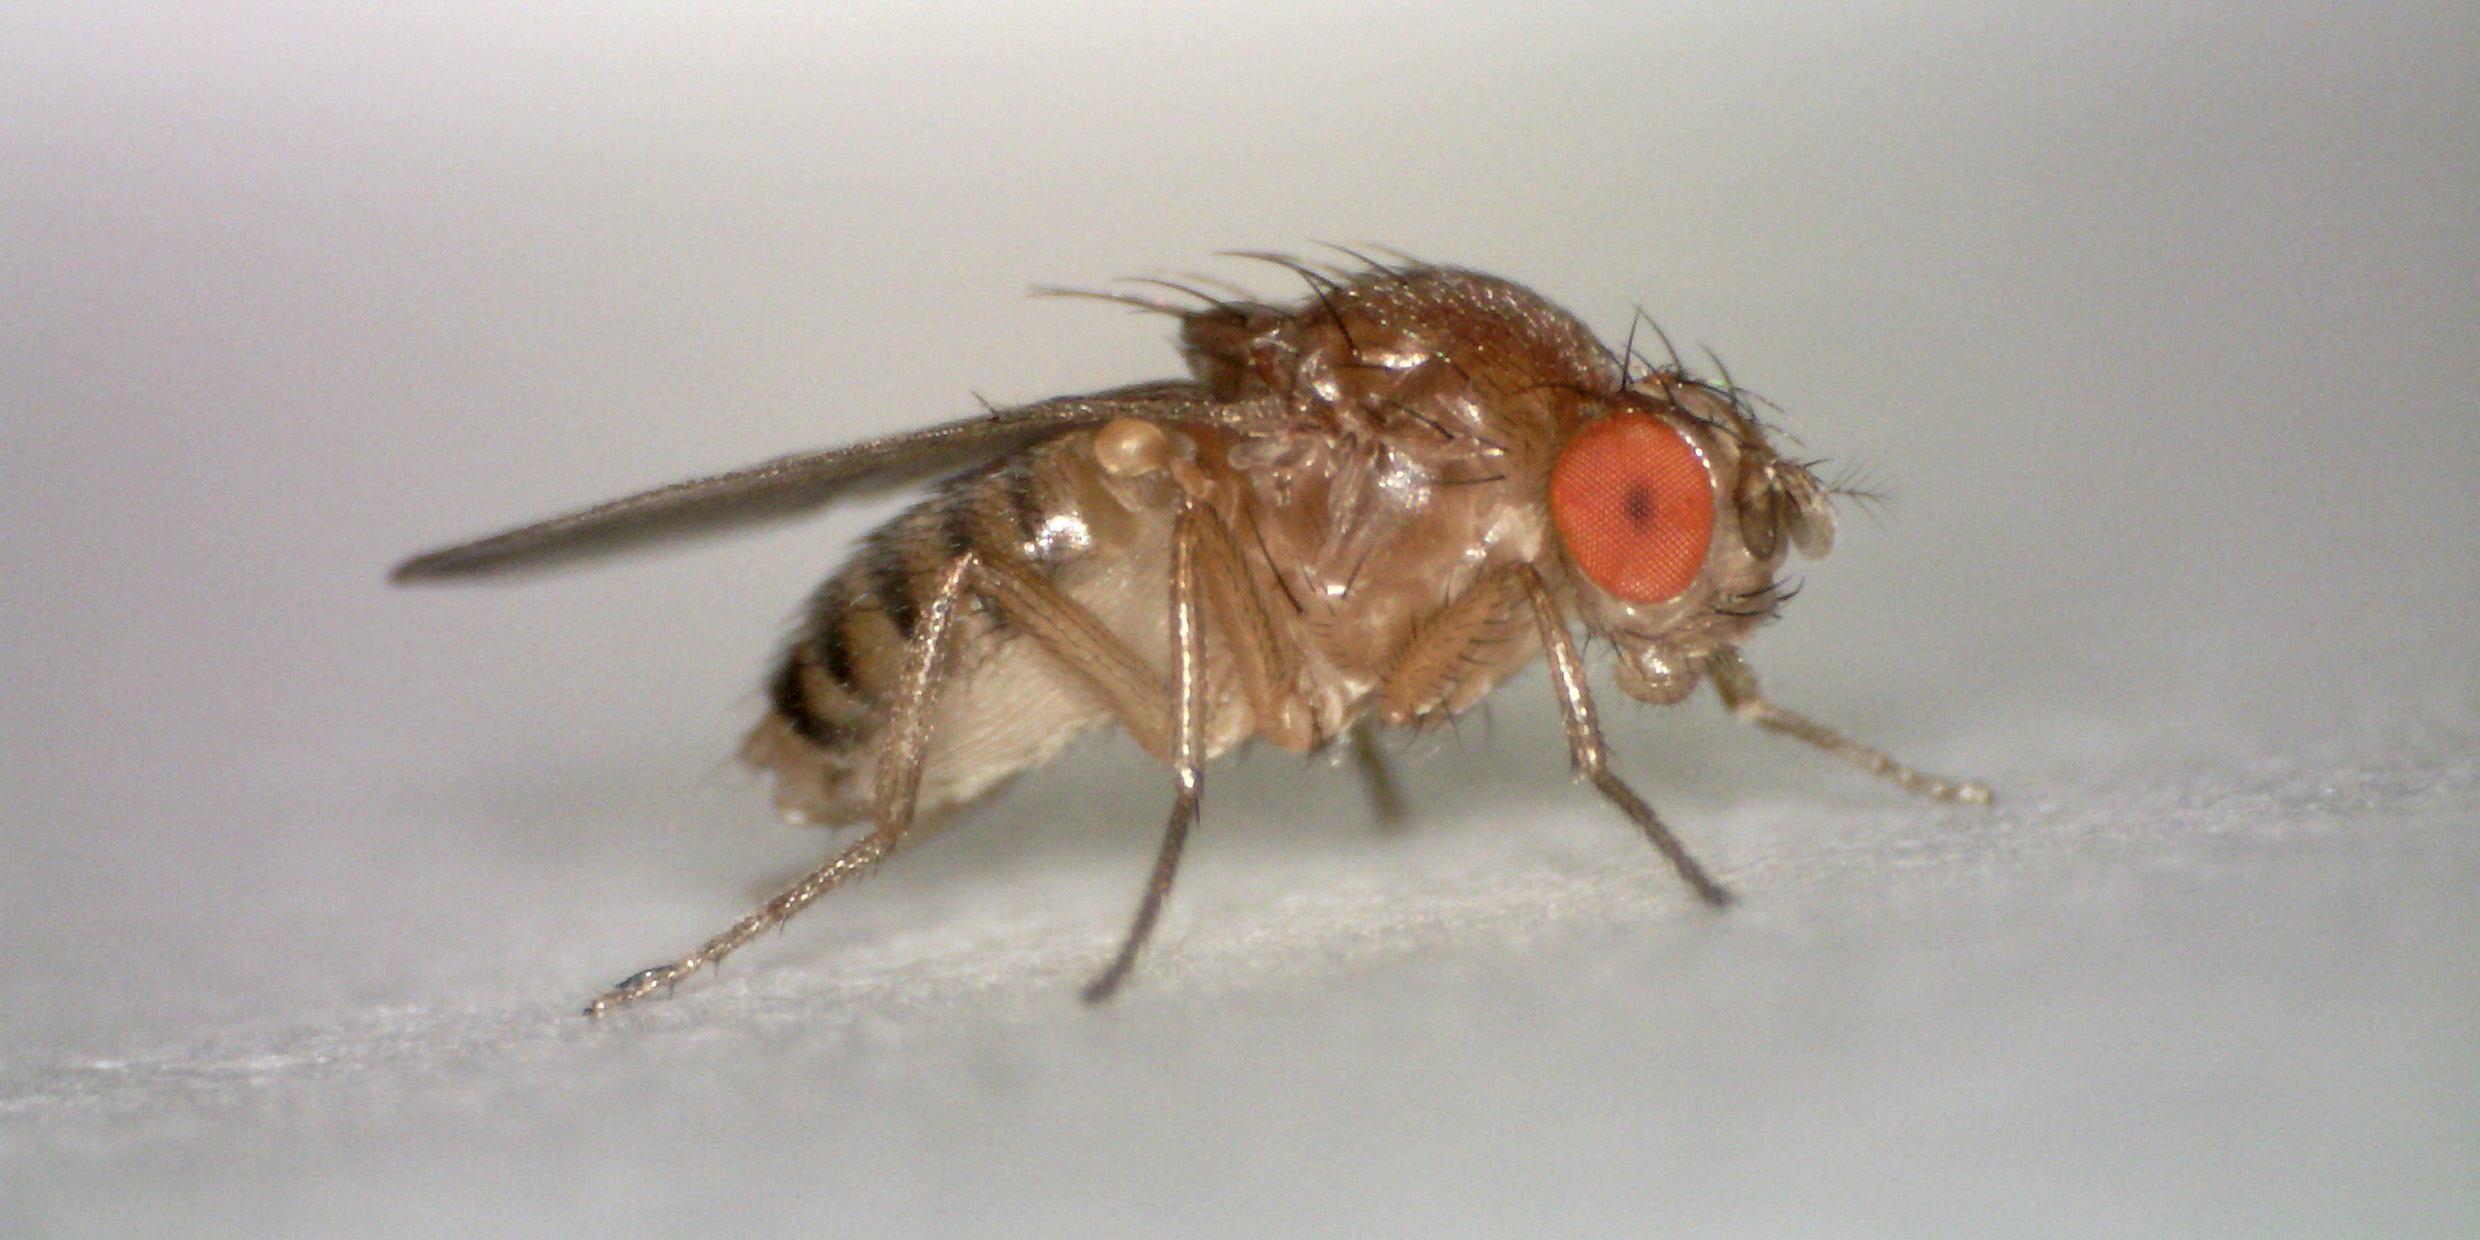 All hail the fruit fly